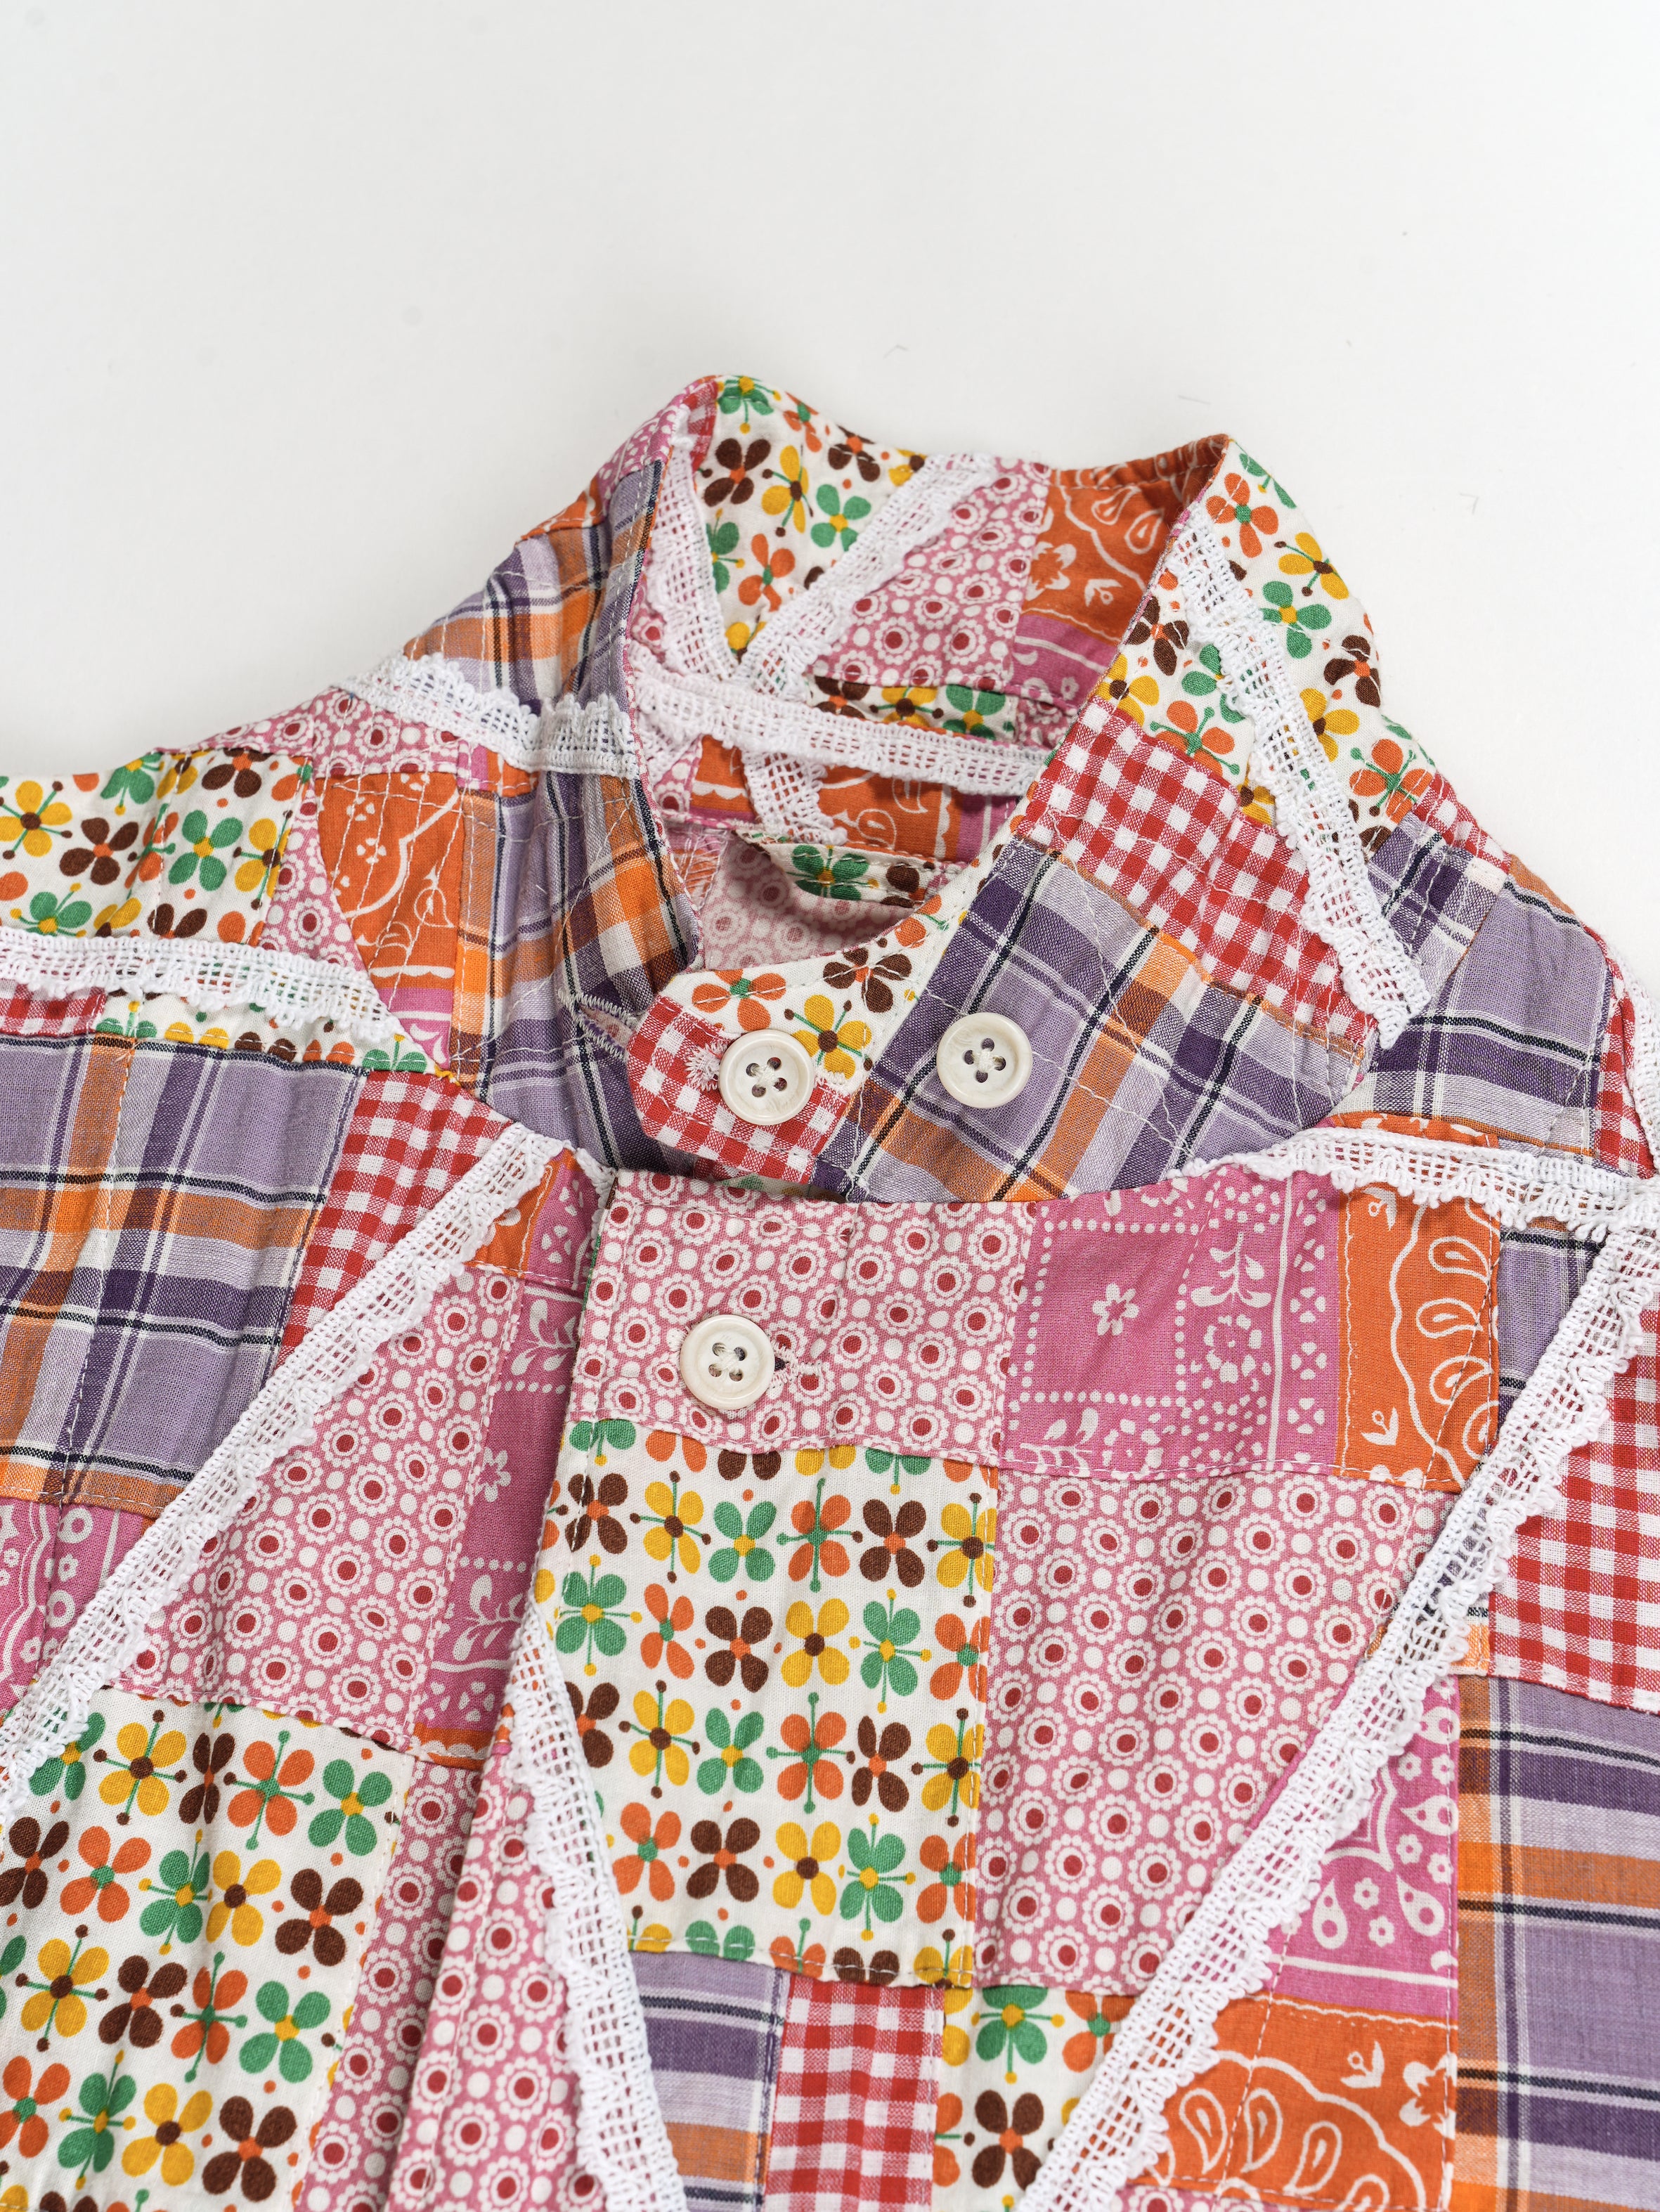 Engineered Garments Loiter Jacket - Orange Cotton Lace Patchwork